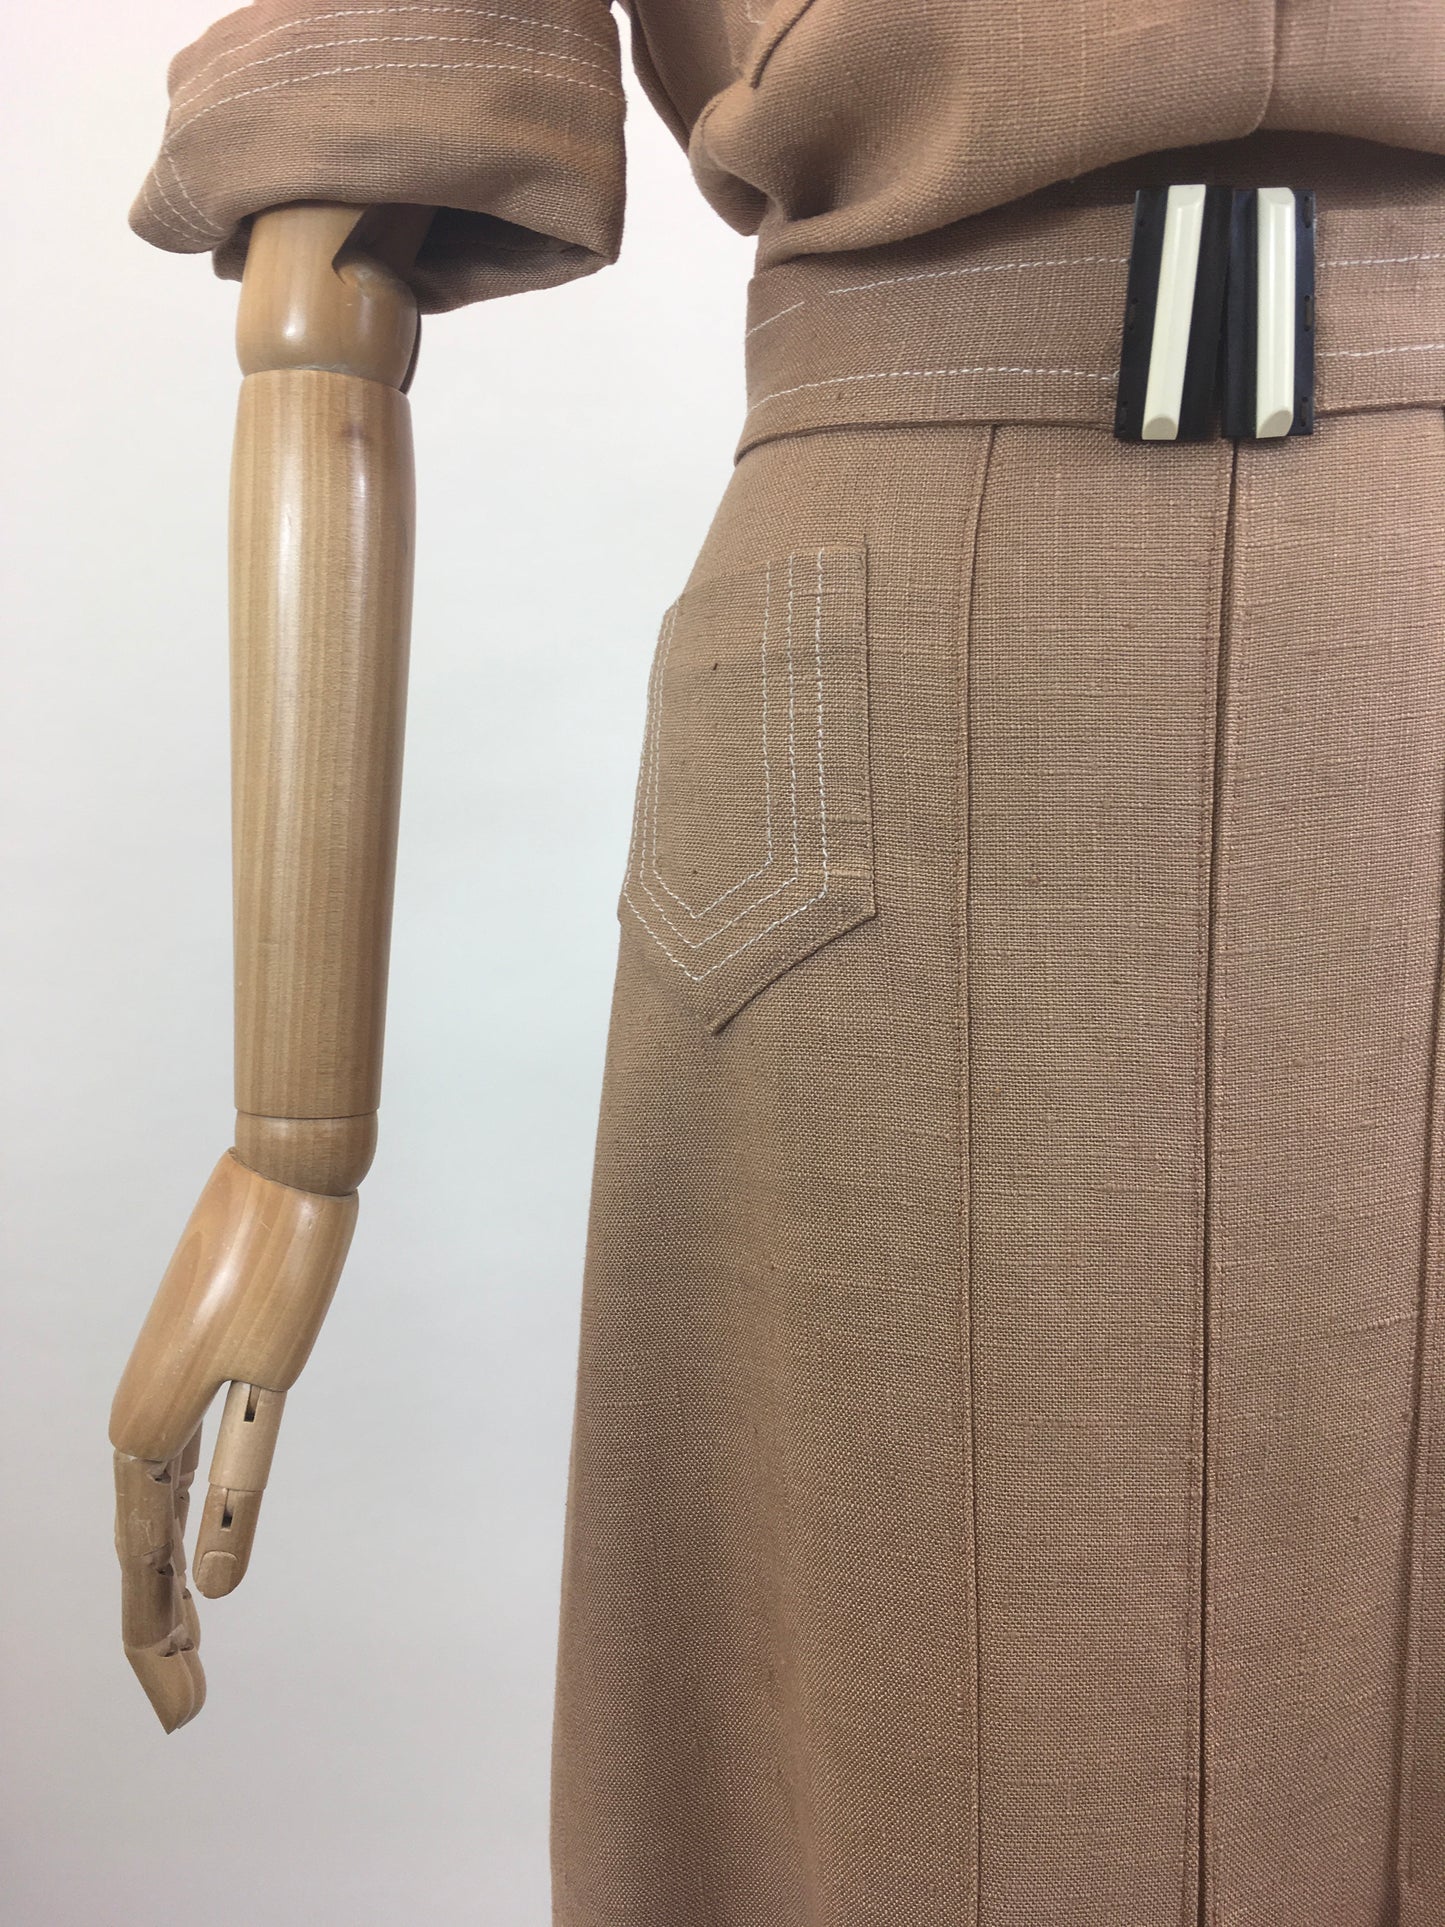 Original CC41  1940's Fabulous Moygashel Linen Dress - Soft Caramel